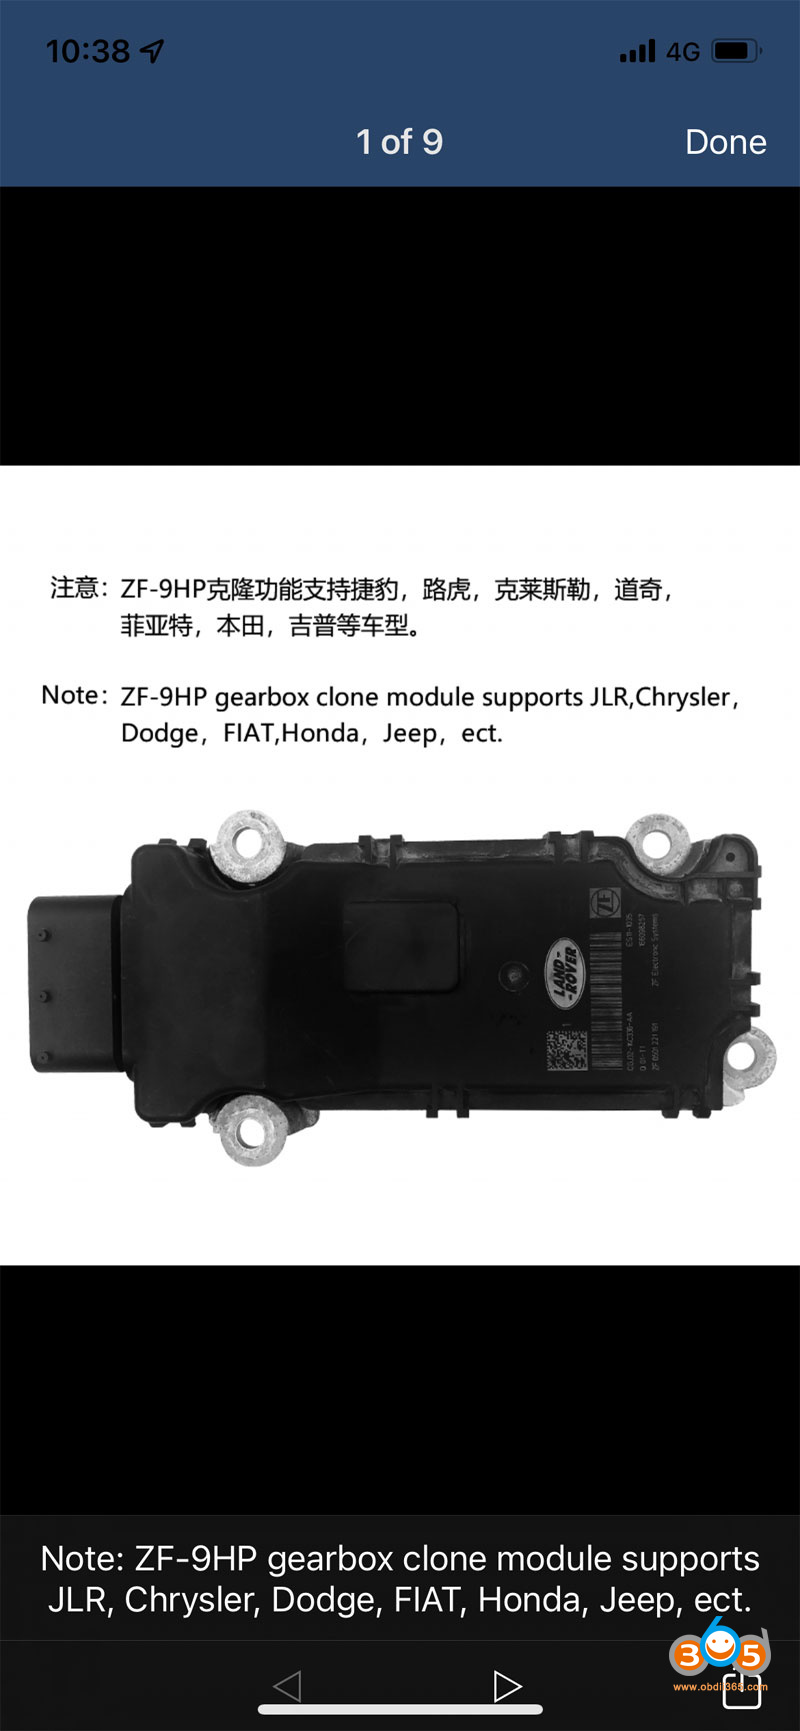  Clone ZF-9HP Gearbox with Yanhua Mini ACDP Module 28 1